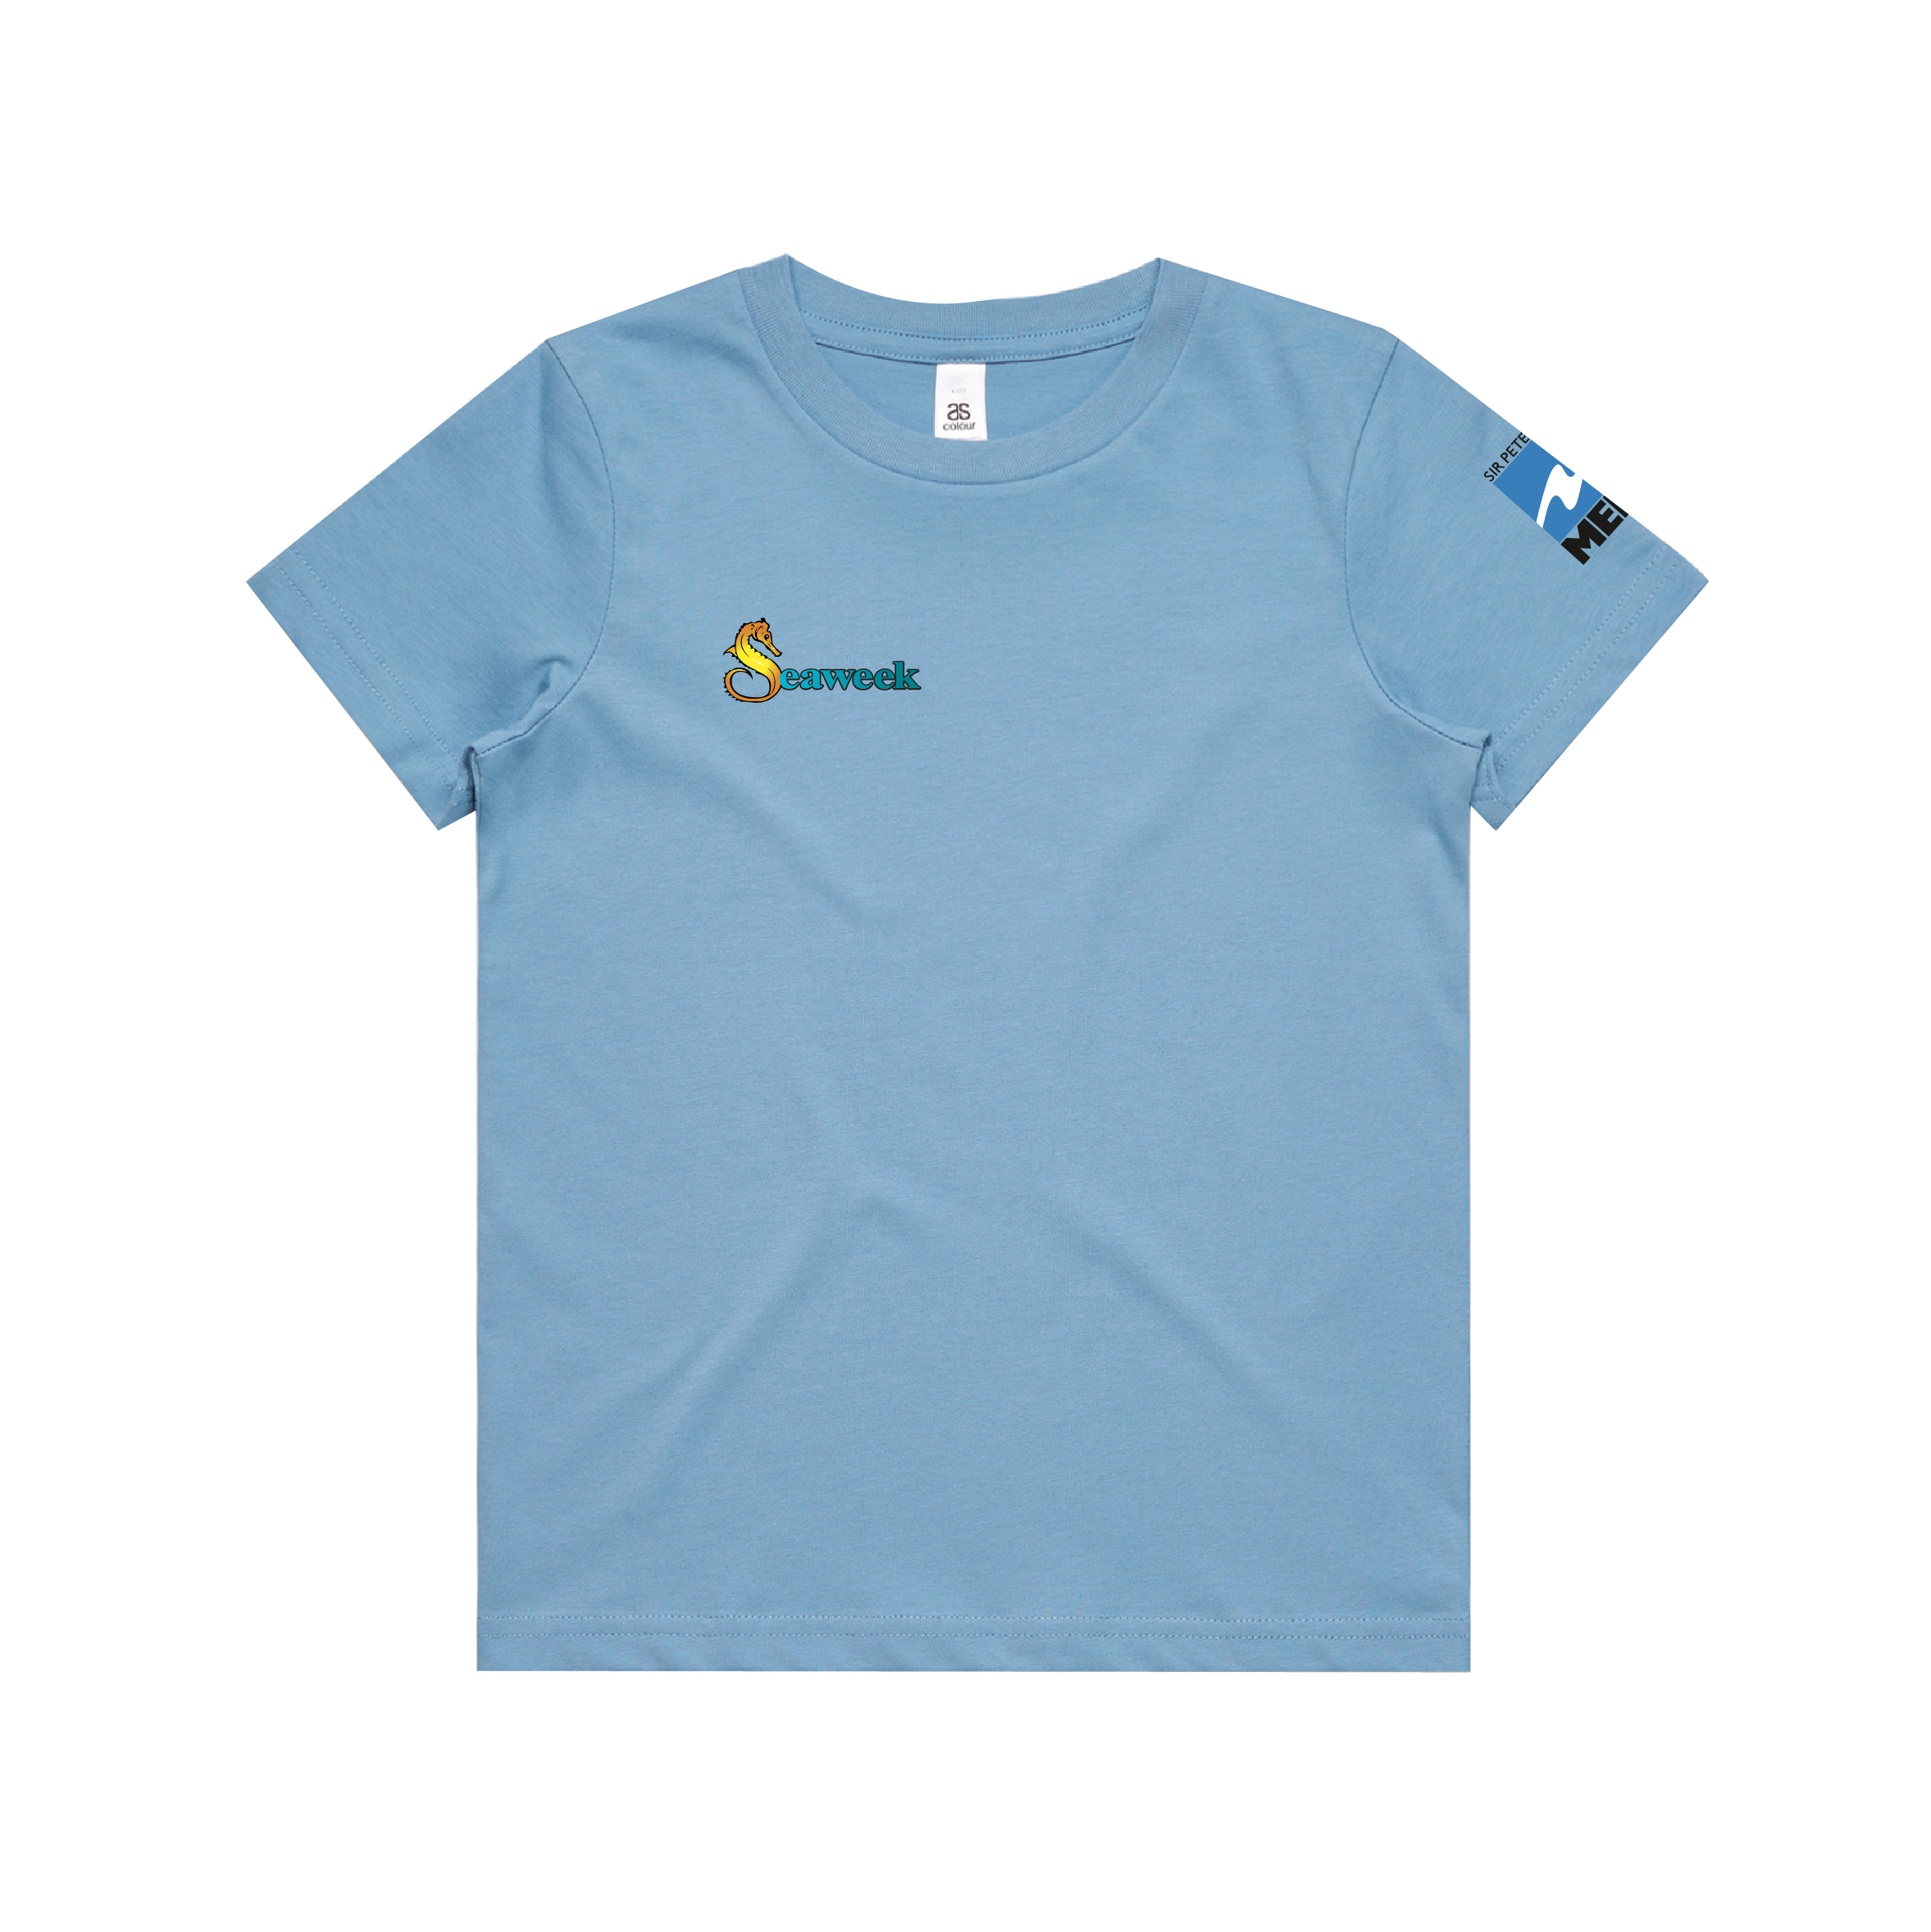 Seaweek - Kids Tee Shirt - Pre Order - Custom Clothing | T Shirt Printing | Embroidery | Screen Printing | Print Room NZ